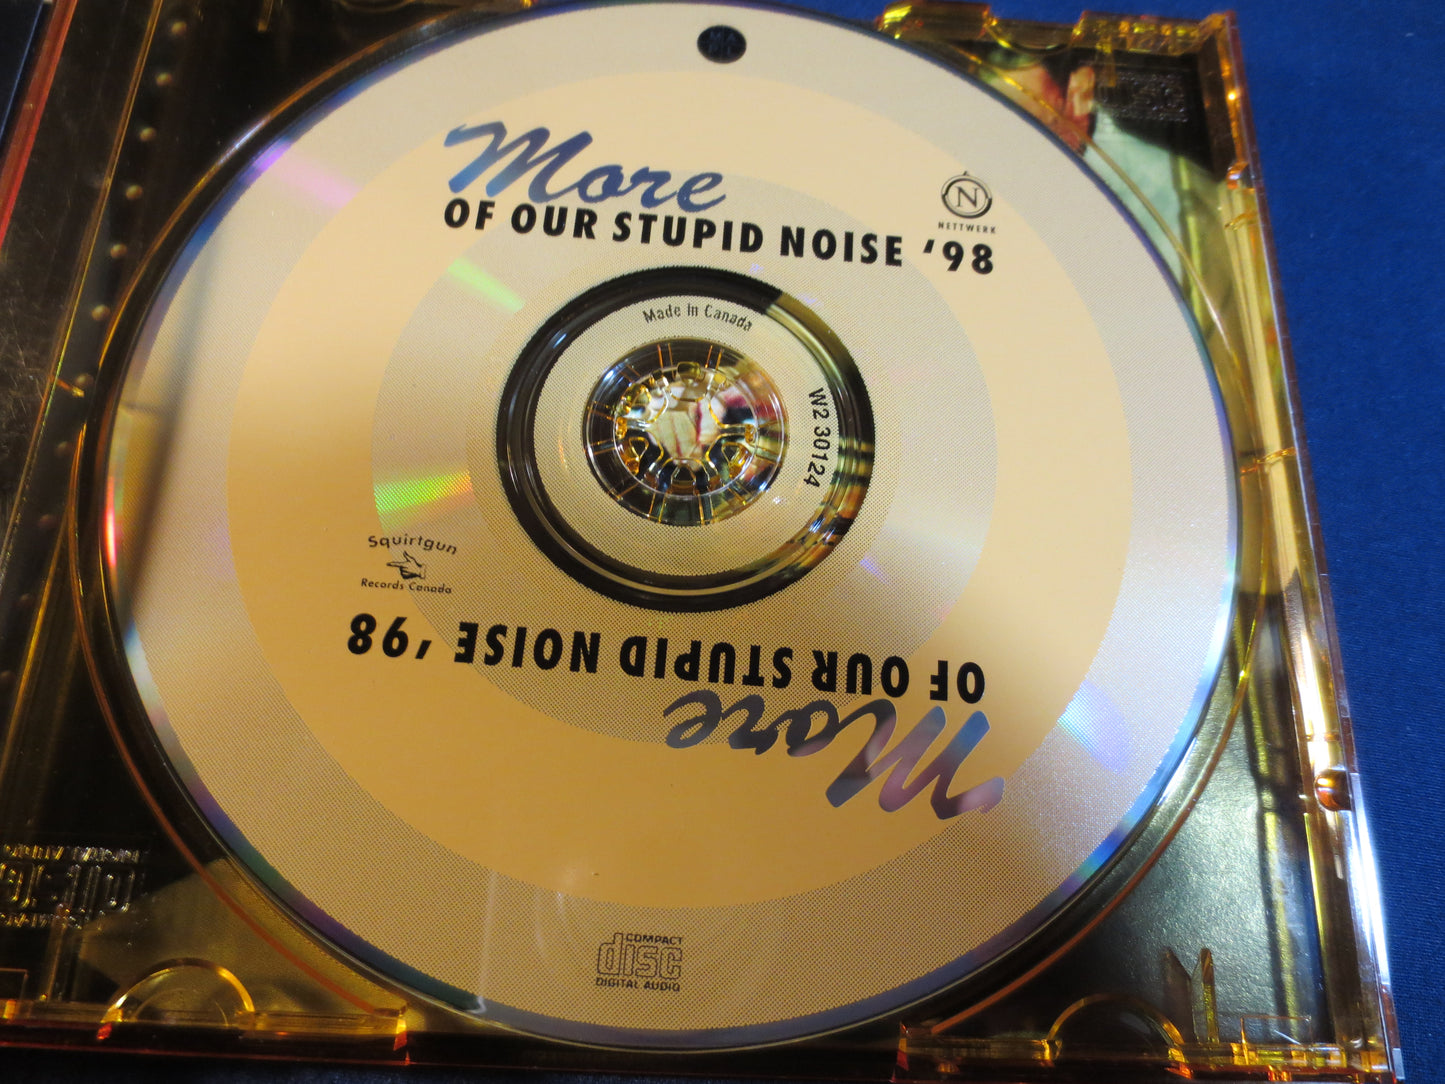 MORE STUPID NOISE, Hip Hop Cd, Rock Cd, Pop Rock Cd, Moon Socket Cd, Cds, Mystery Machine Cd, Indie Rock Cd, 1998 Compact Disc